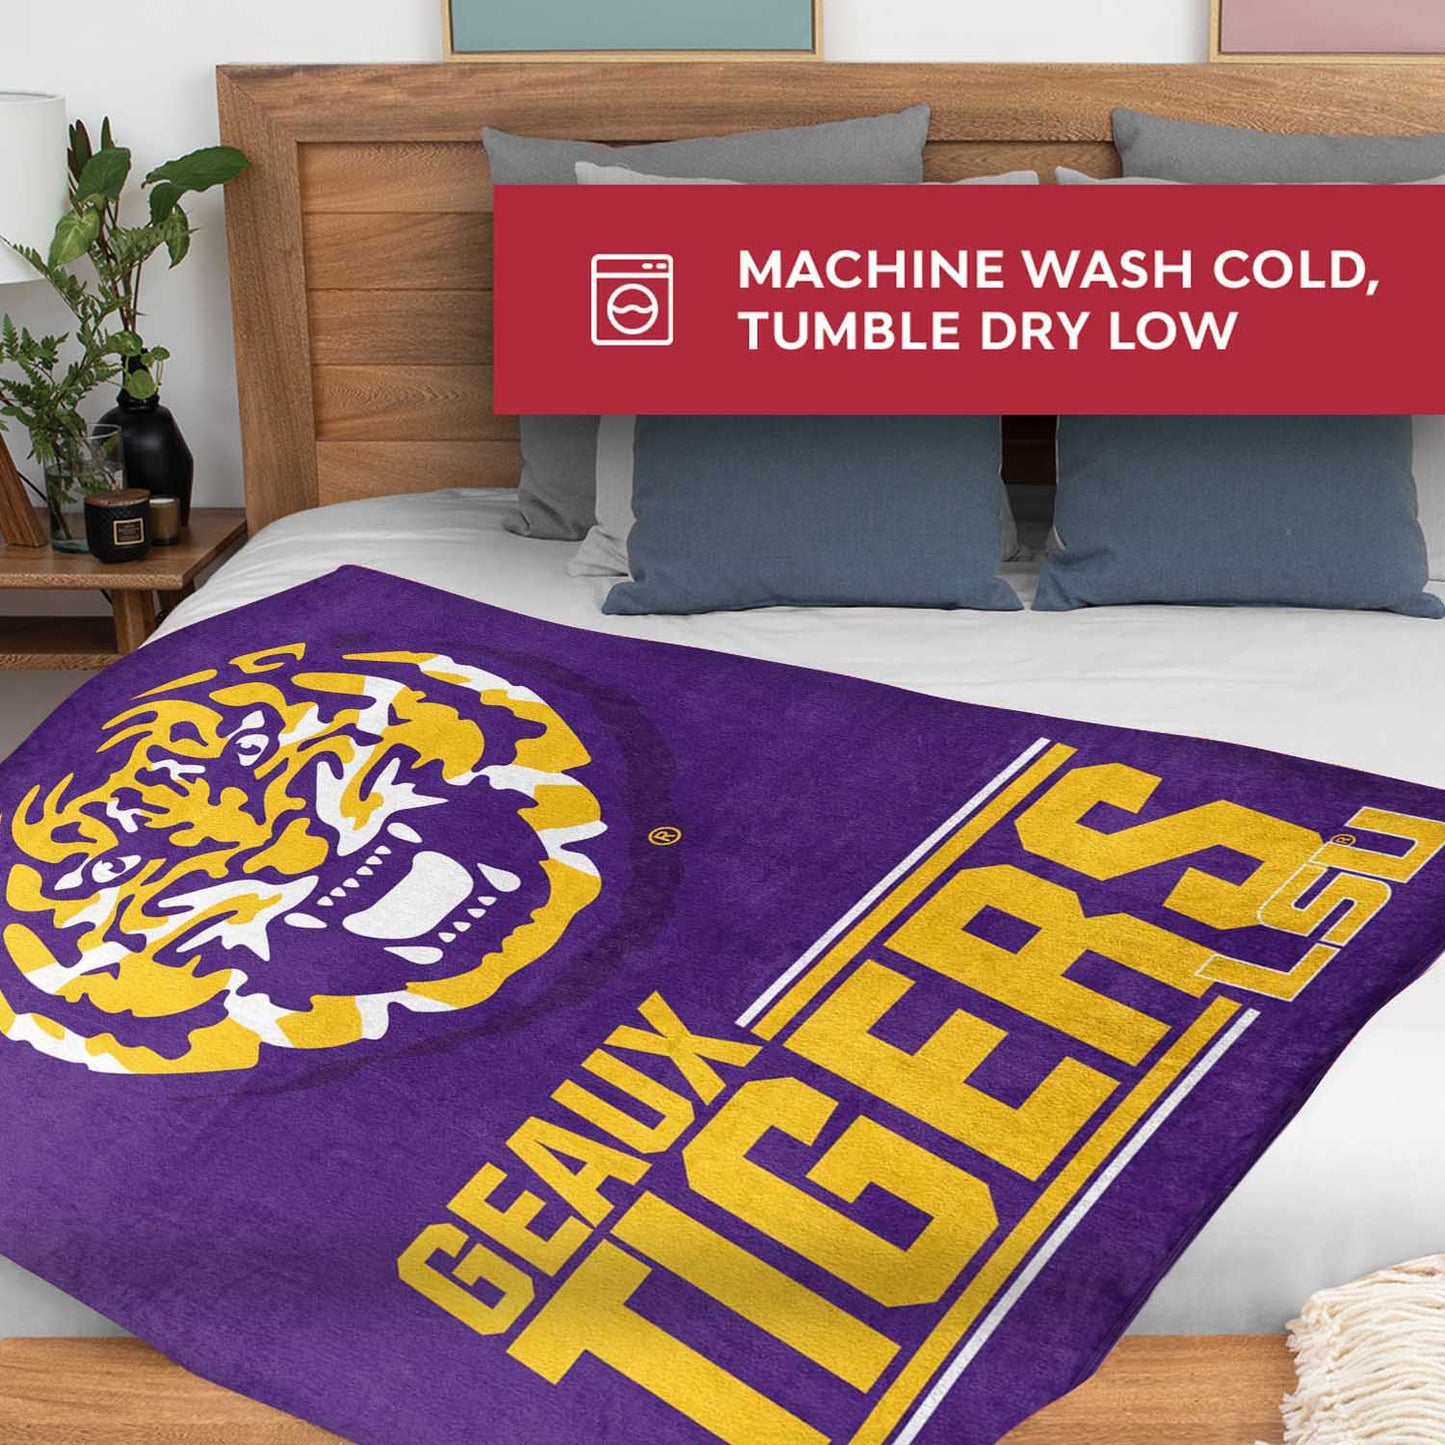 LSU Tigers NCAA Double Sided Blanket - Purple